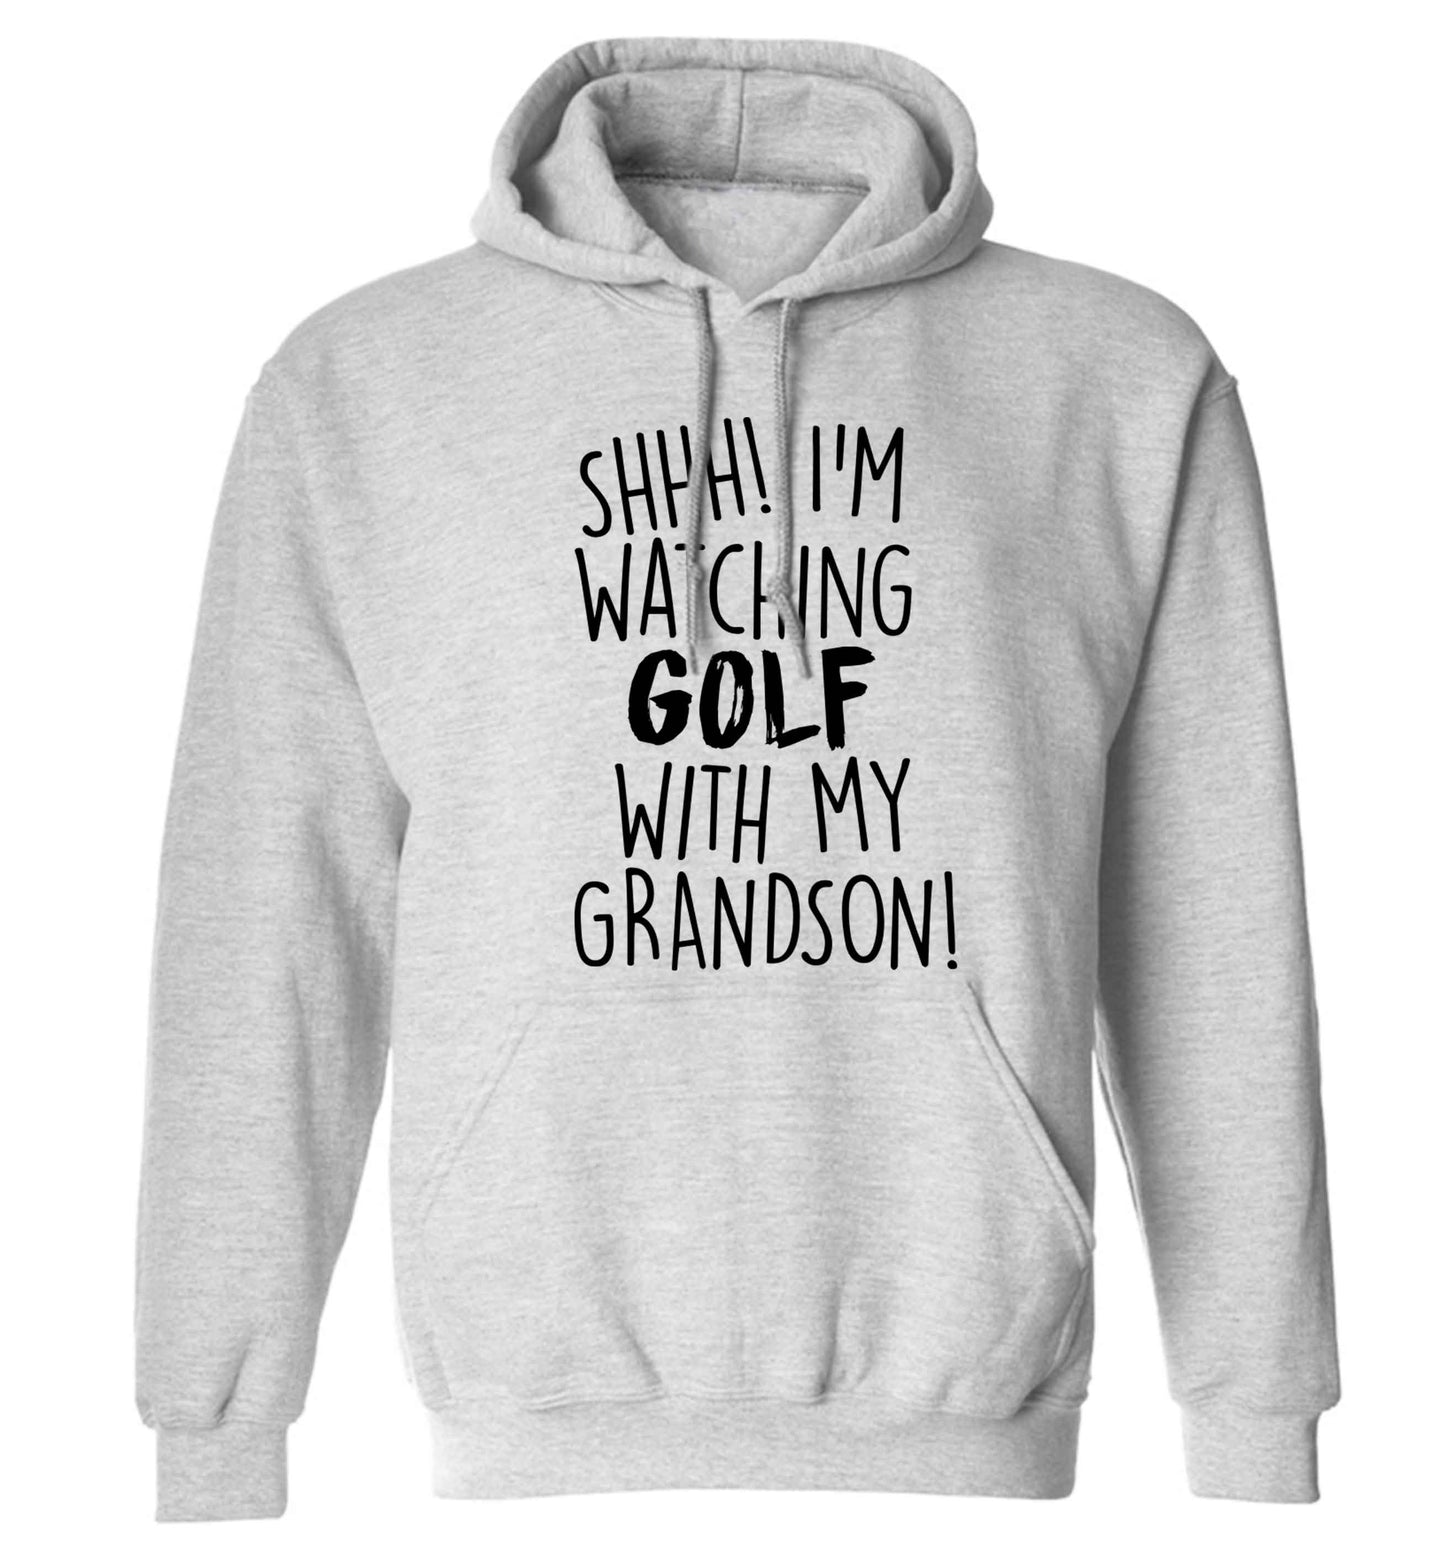 Shh I'm watching golf with my grandsonadults unisex grey hoodie 2XL